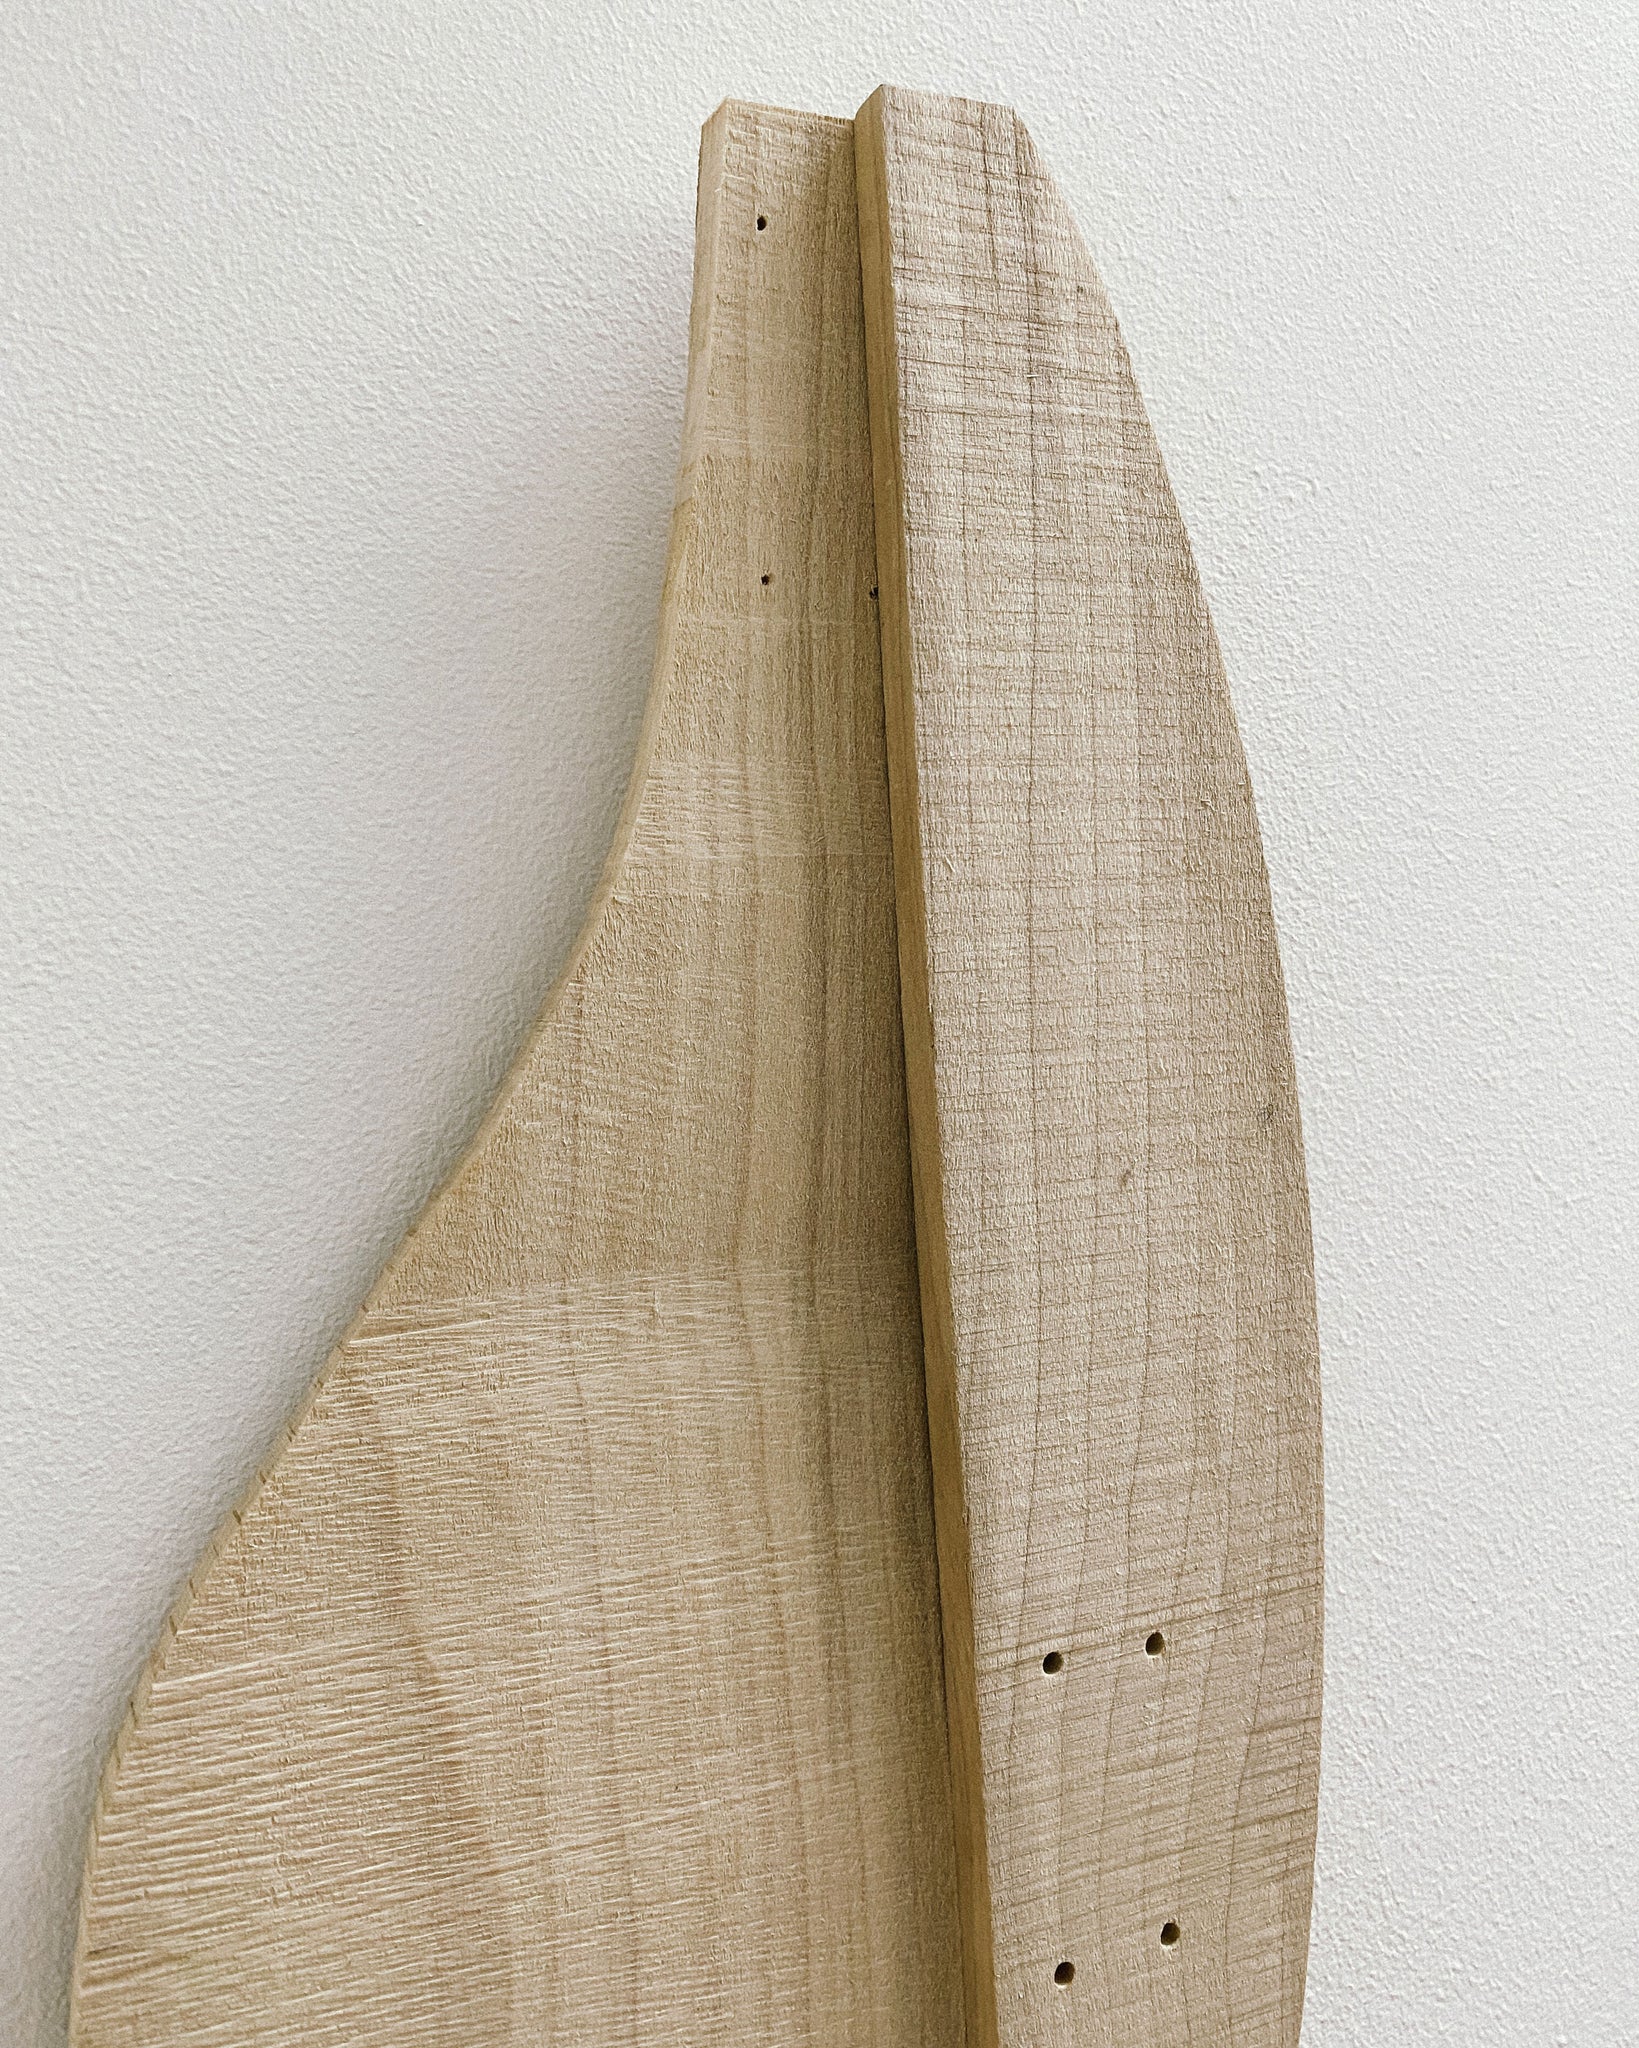 Wooden Sculpture No. 5